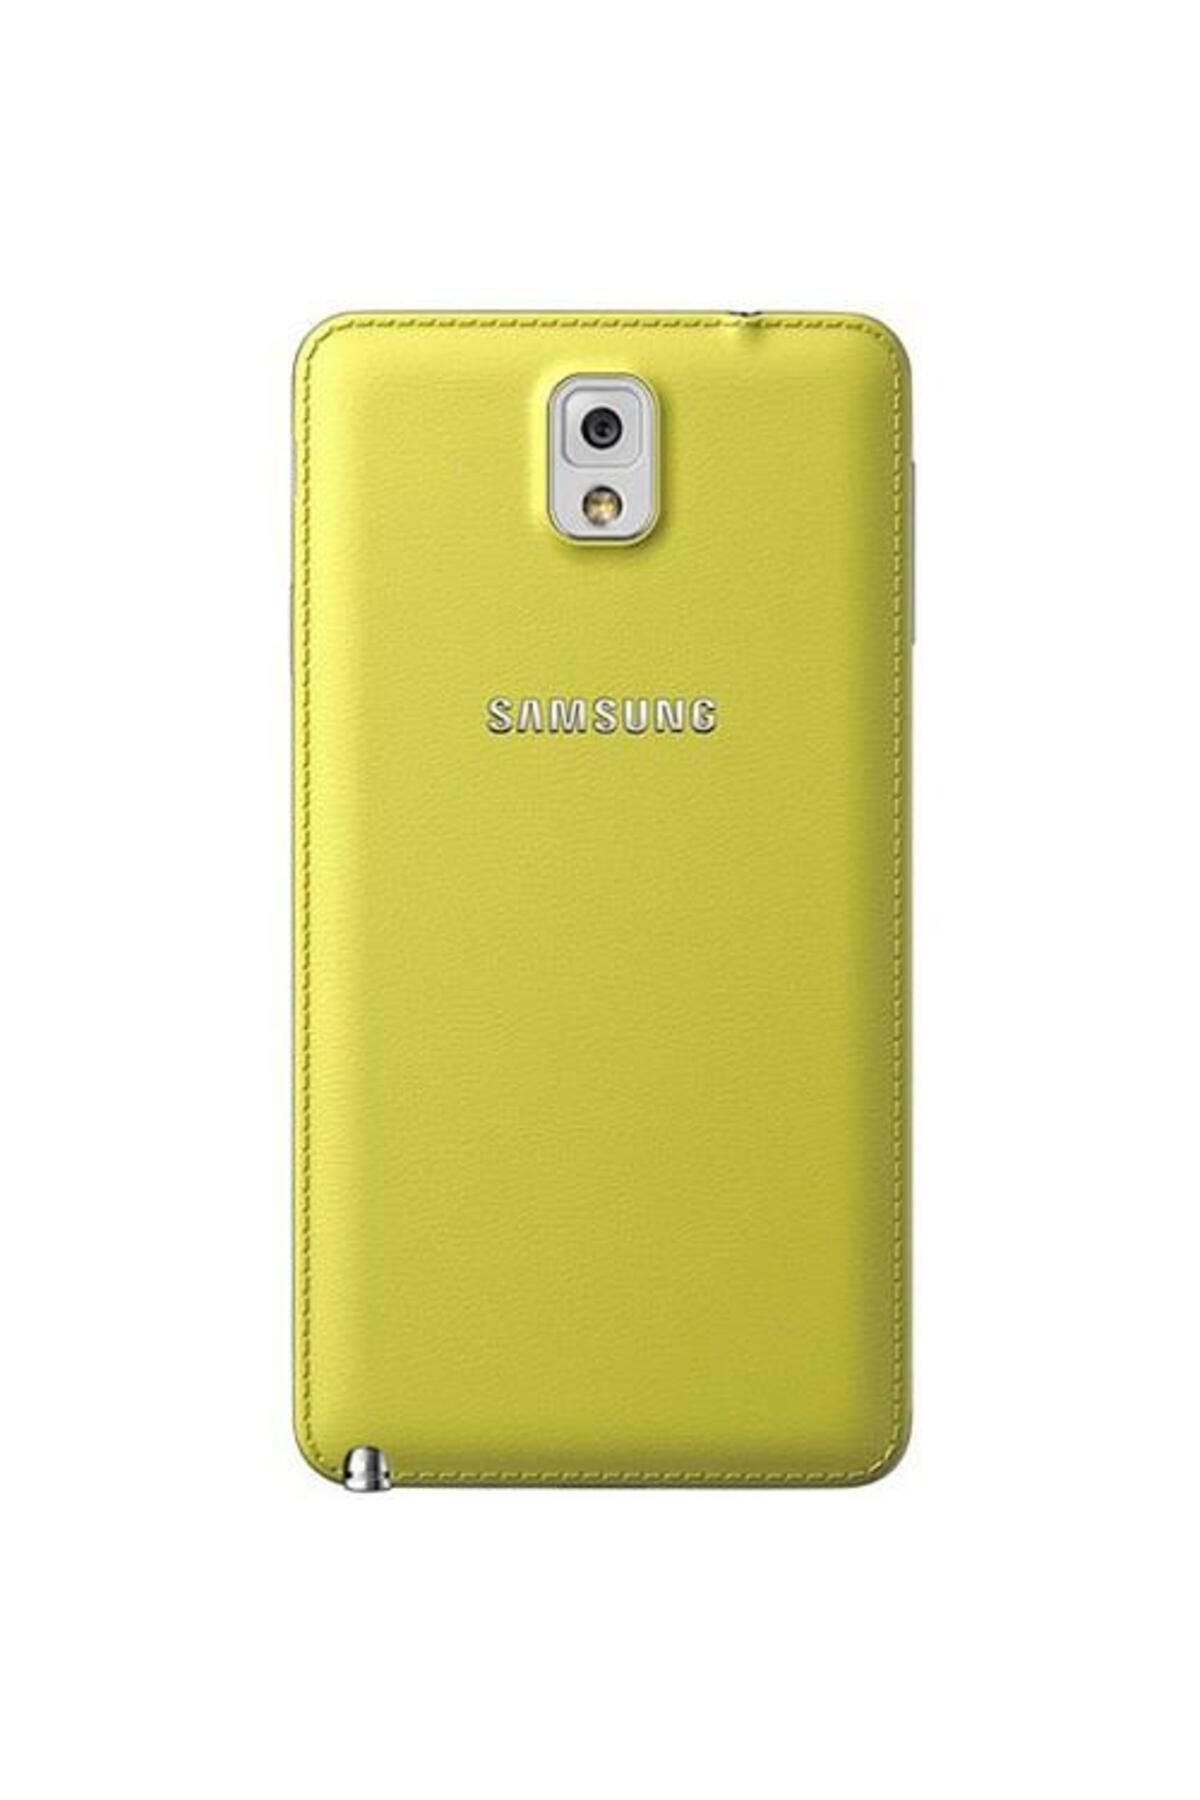 Samsung Galaxy Note 3 N9000 Ile Uyumlu Arka Kapak Sarı Et-bn900s